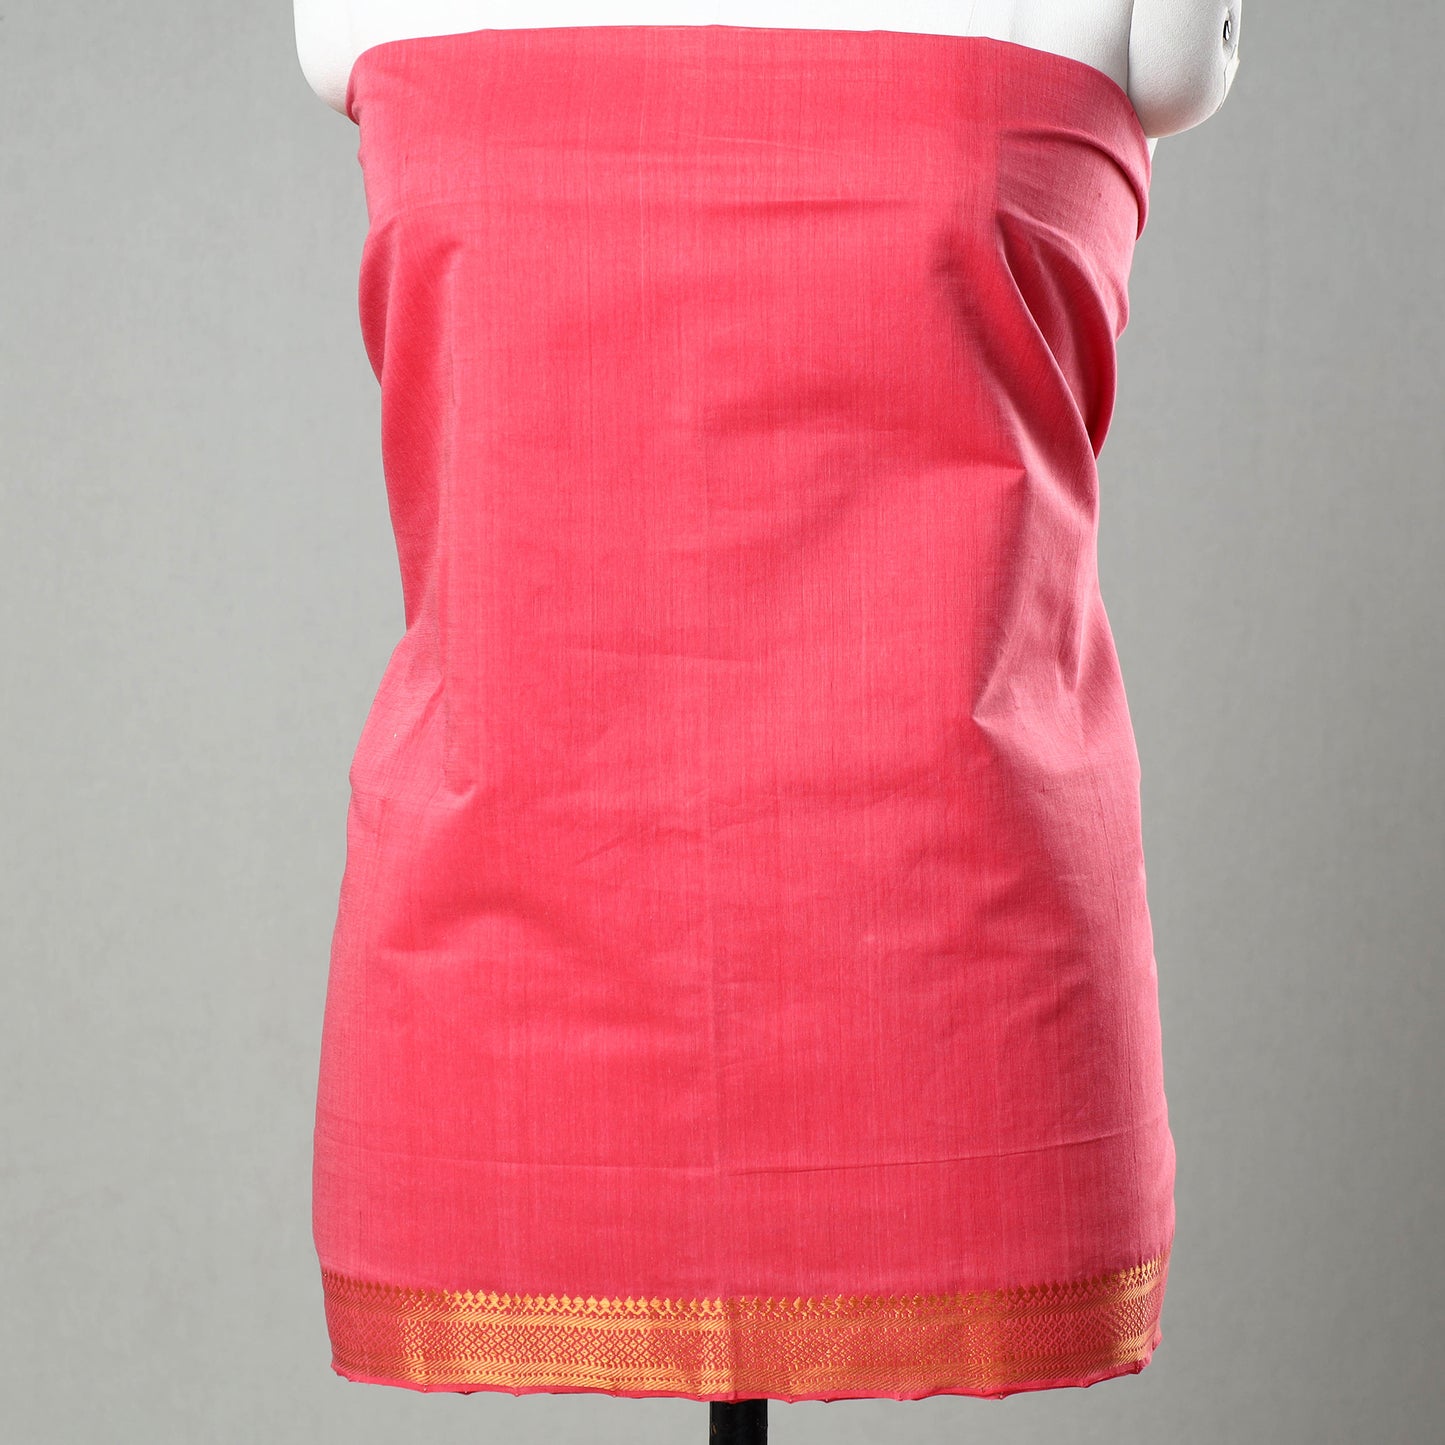 3pc Mangalagiri Handloom Cotton Suit Material Set with Zari Border 11